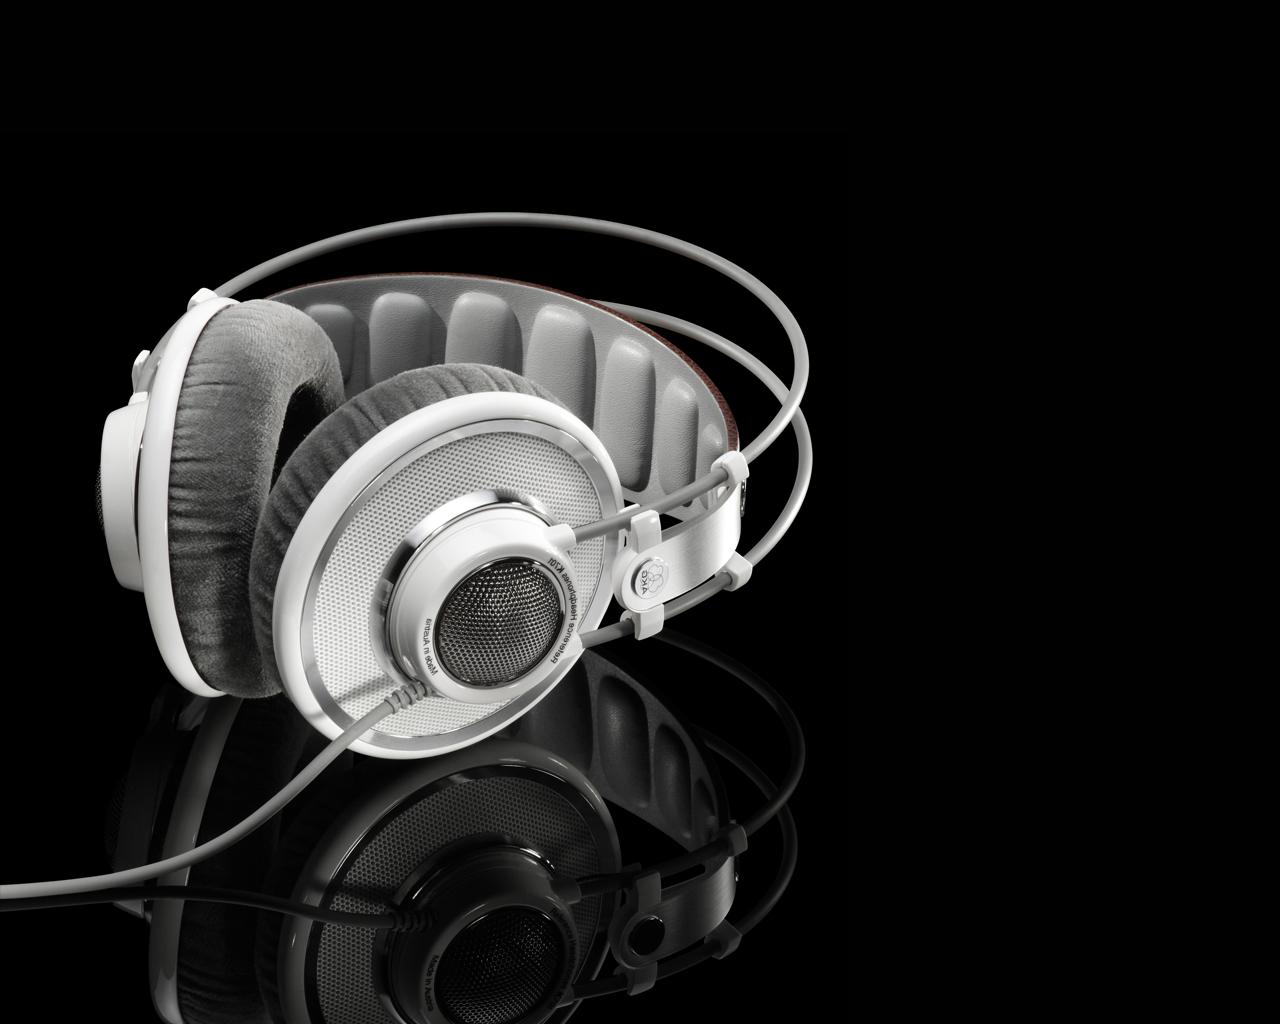 General 1280x1024 minimalism audio monochrome headphones reflection AKG simple background black background